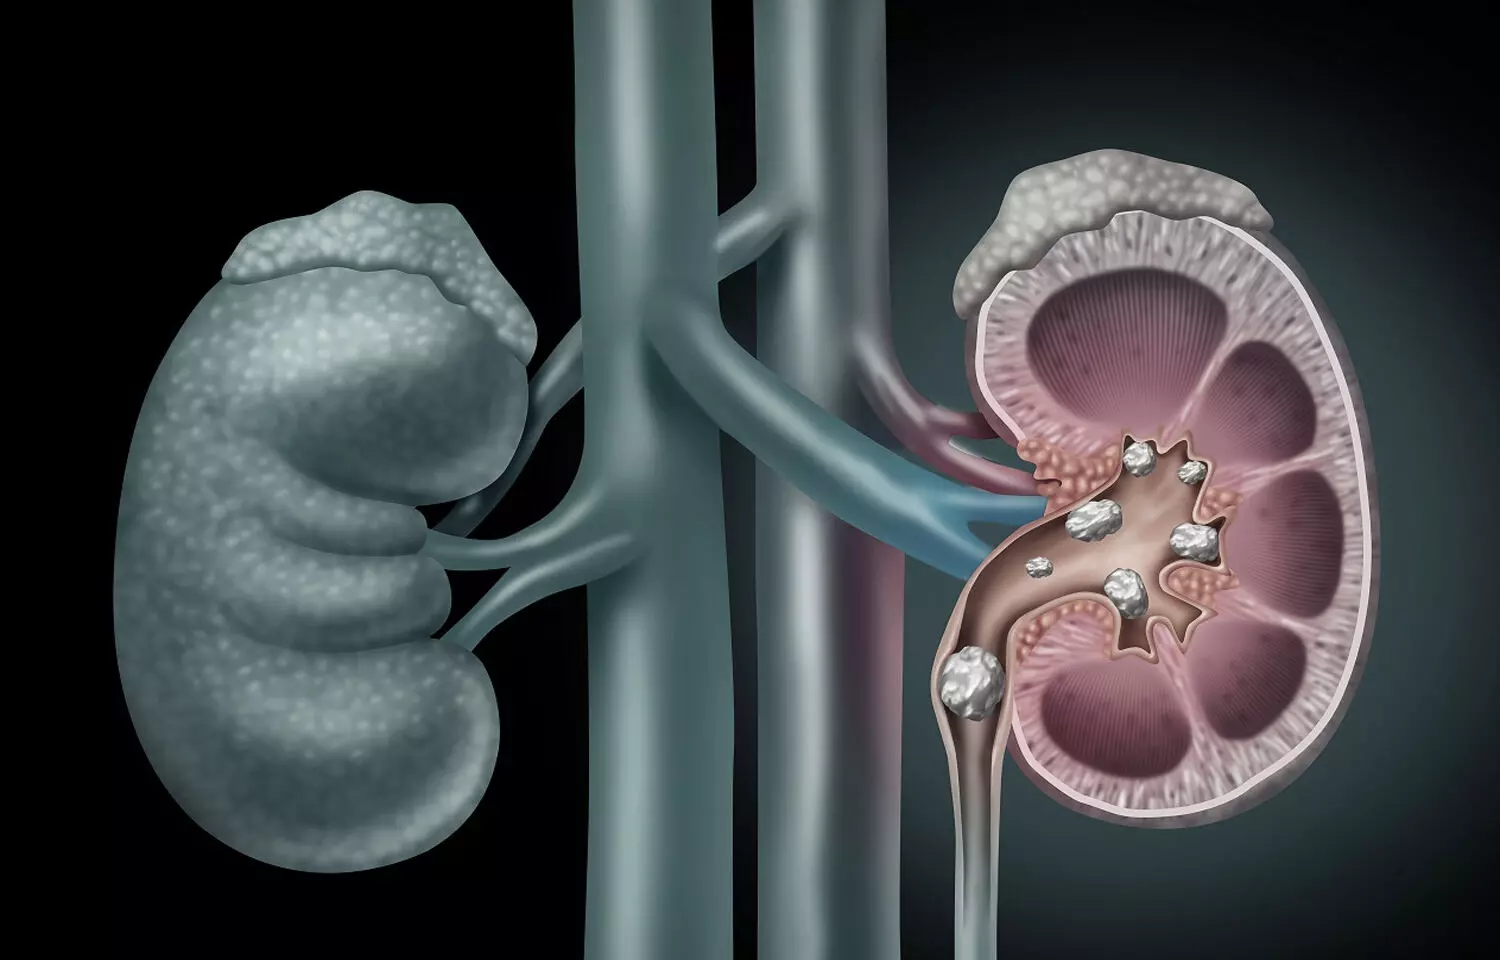 Lumasiran reduces kidney failure risk in primary hyperoxaluria type 1 patients: NEJM